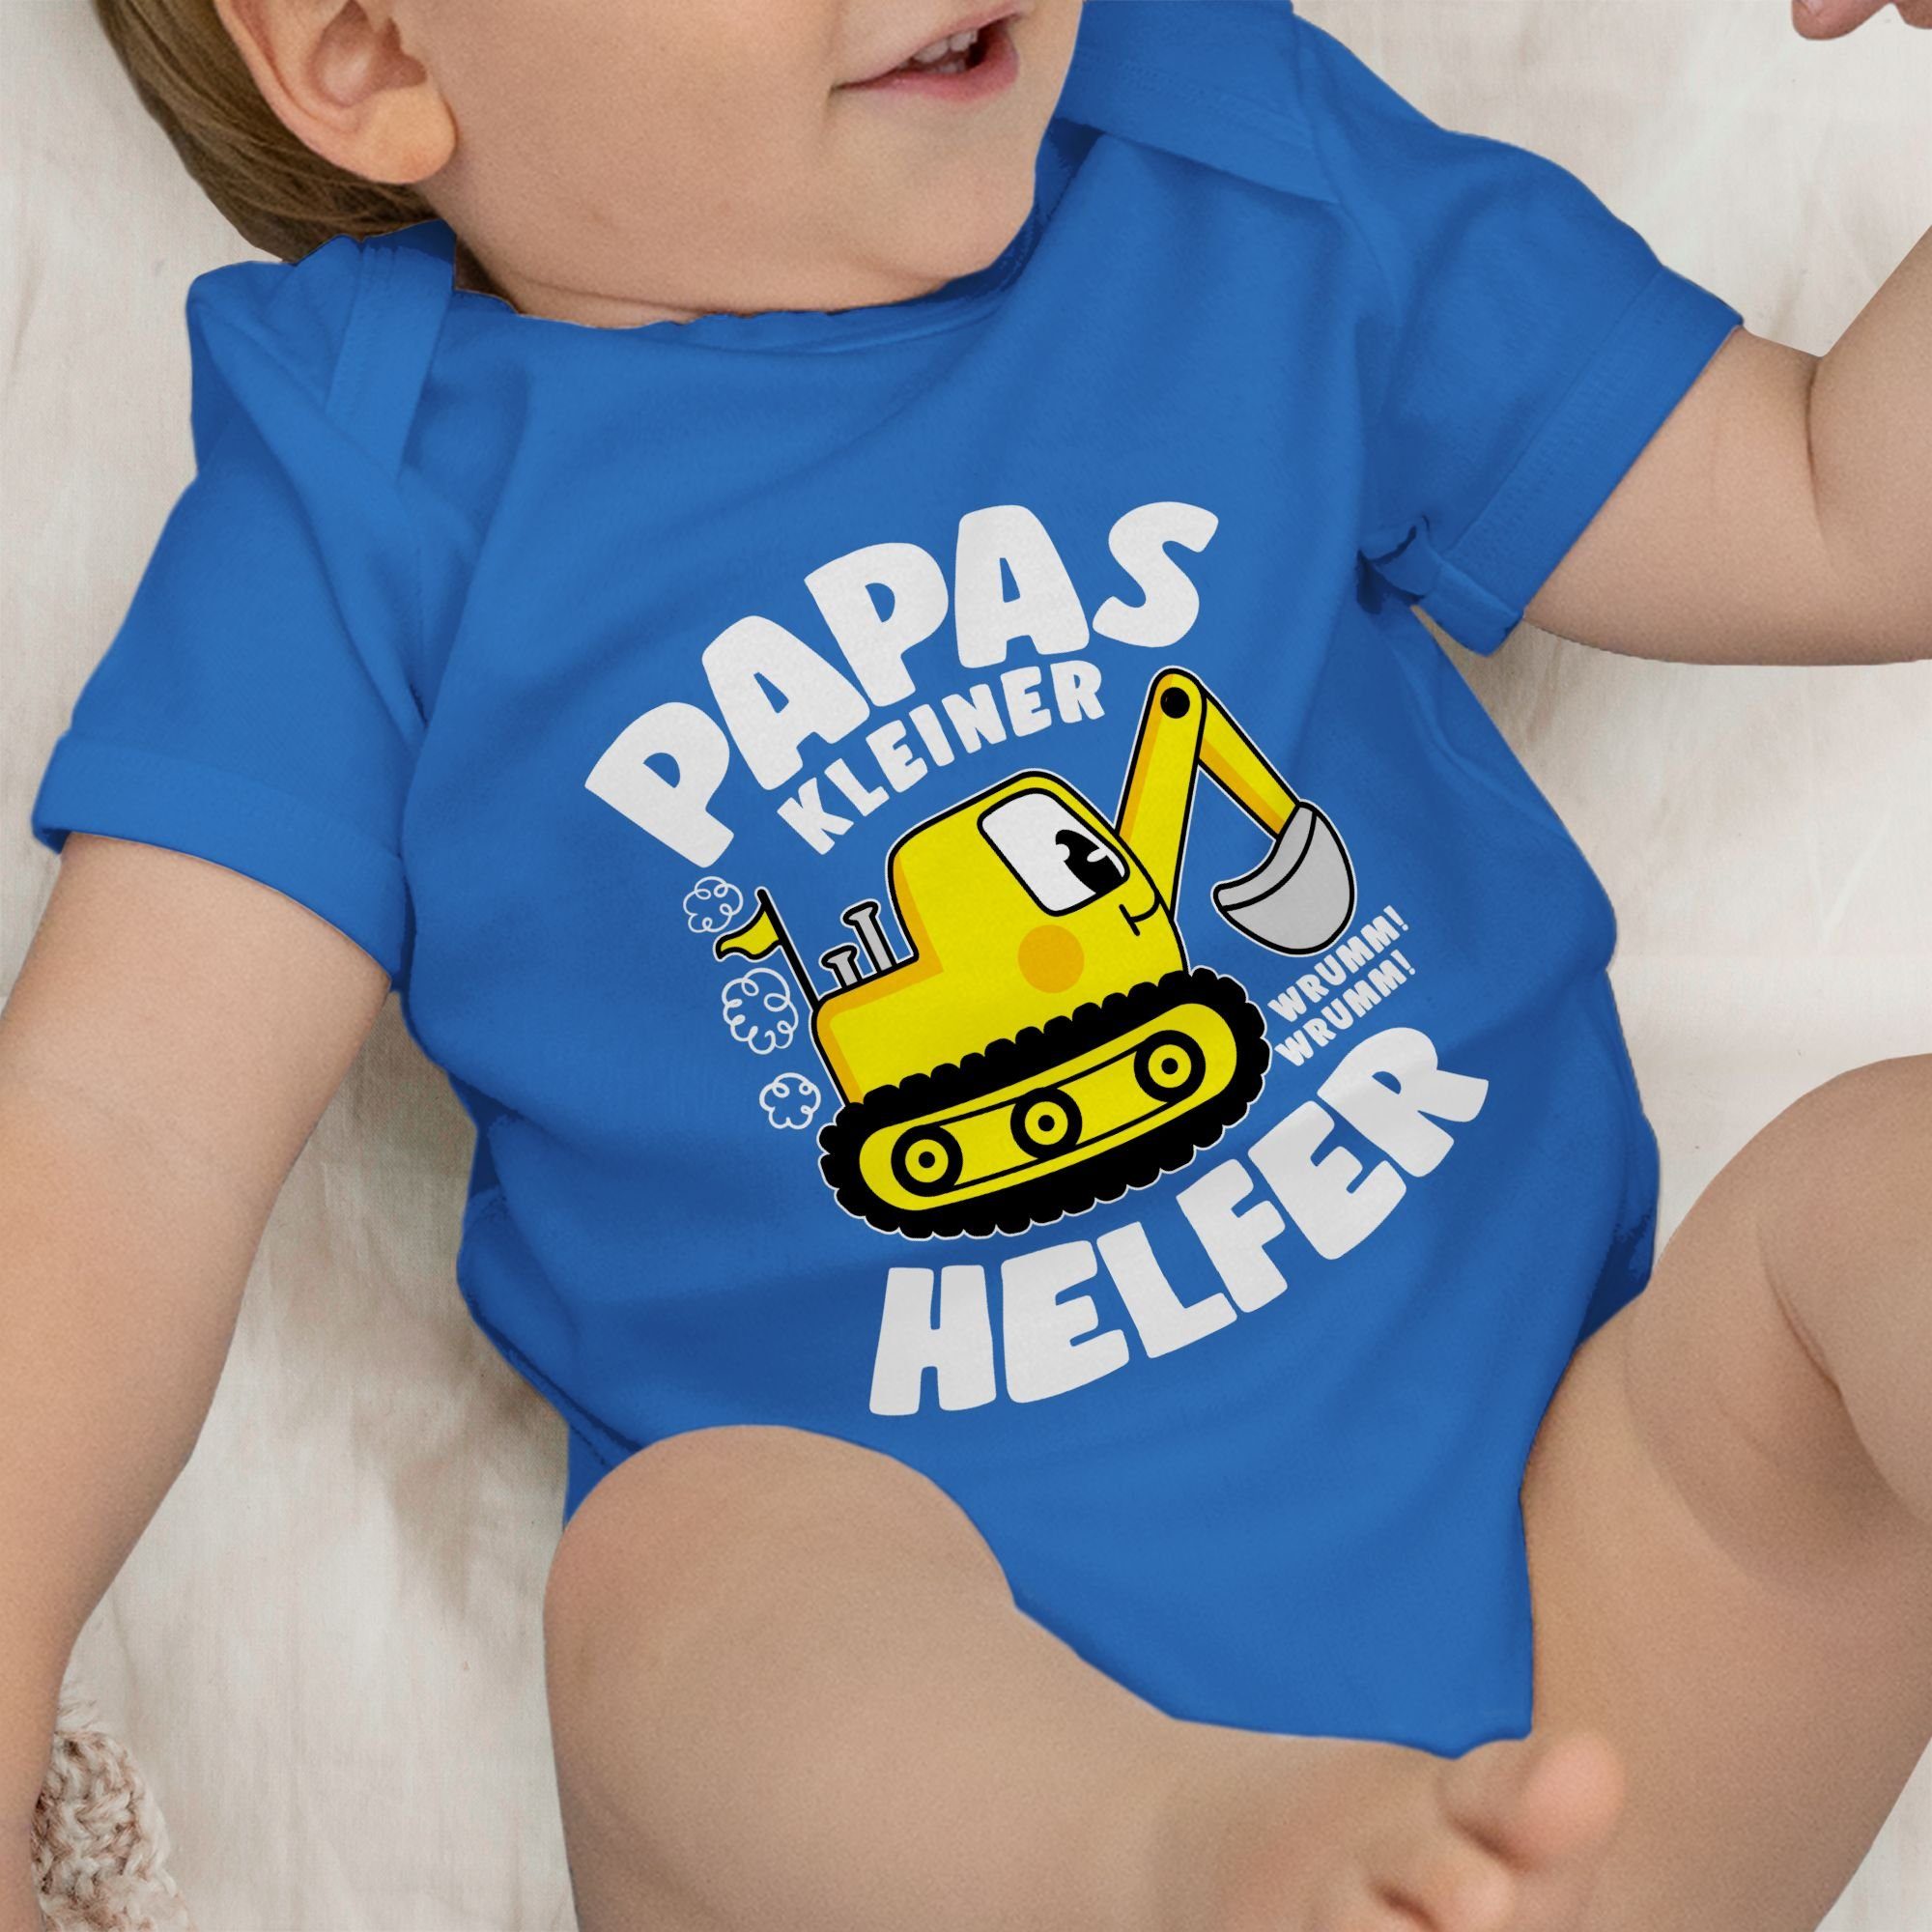 Vatertag kleiner Geschenk Helfer Royalblau Shirtracer Papas 2 Baby I Bagger Shirtbody